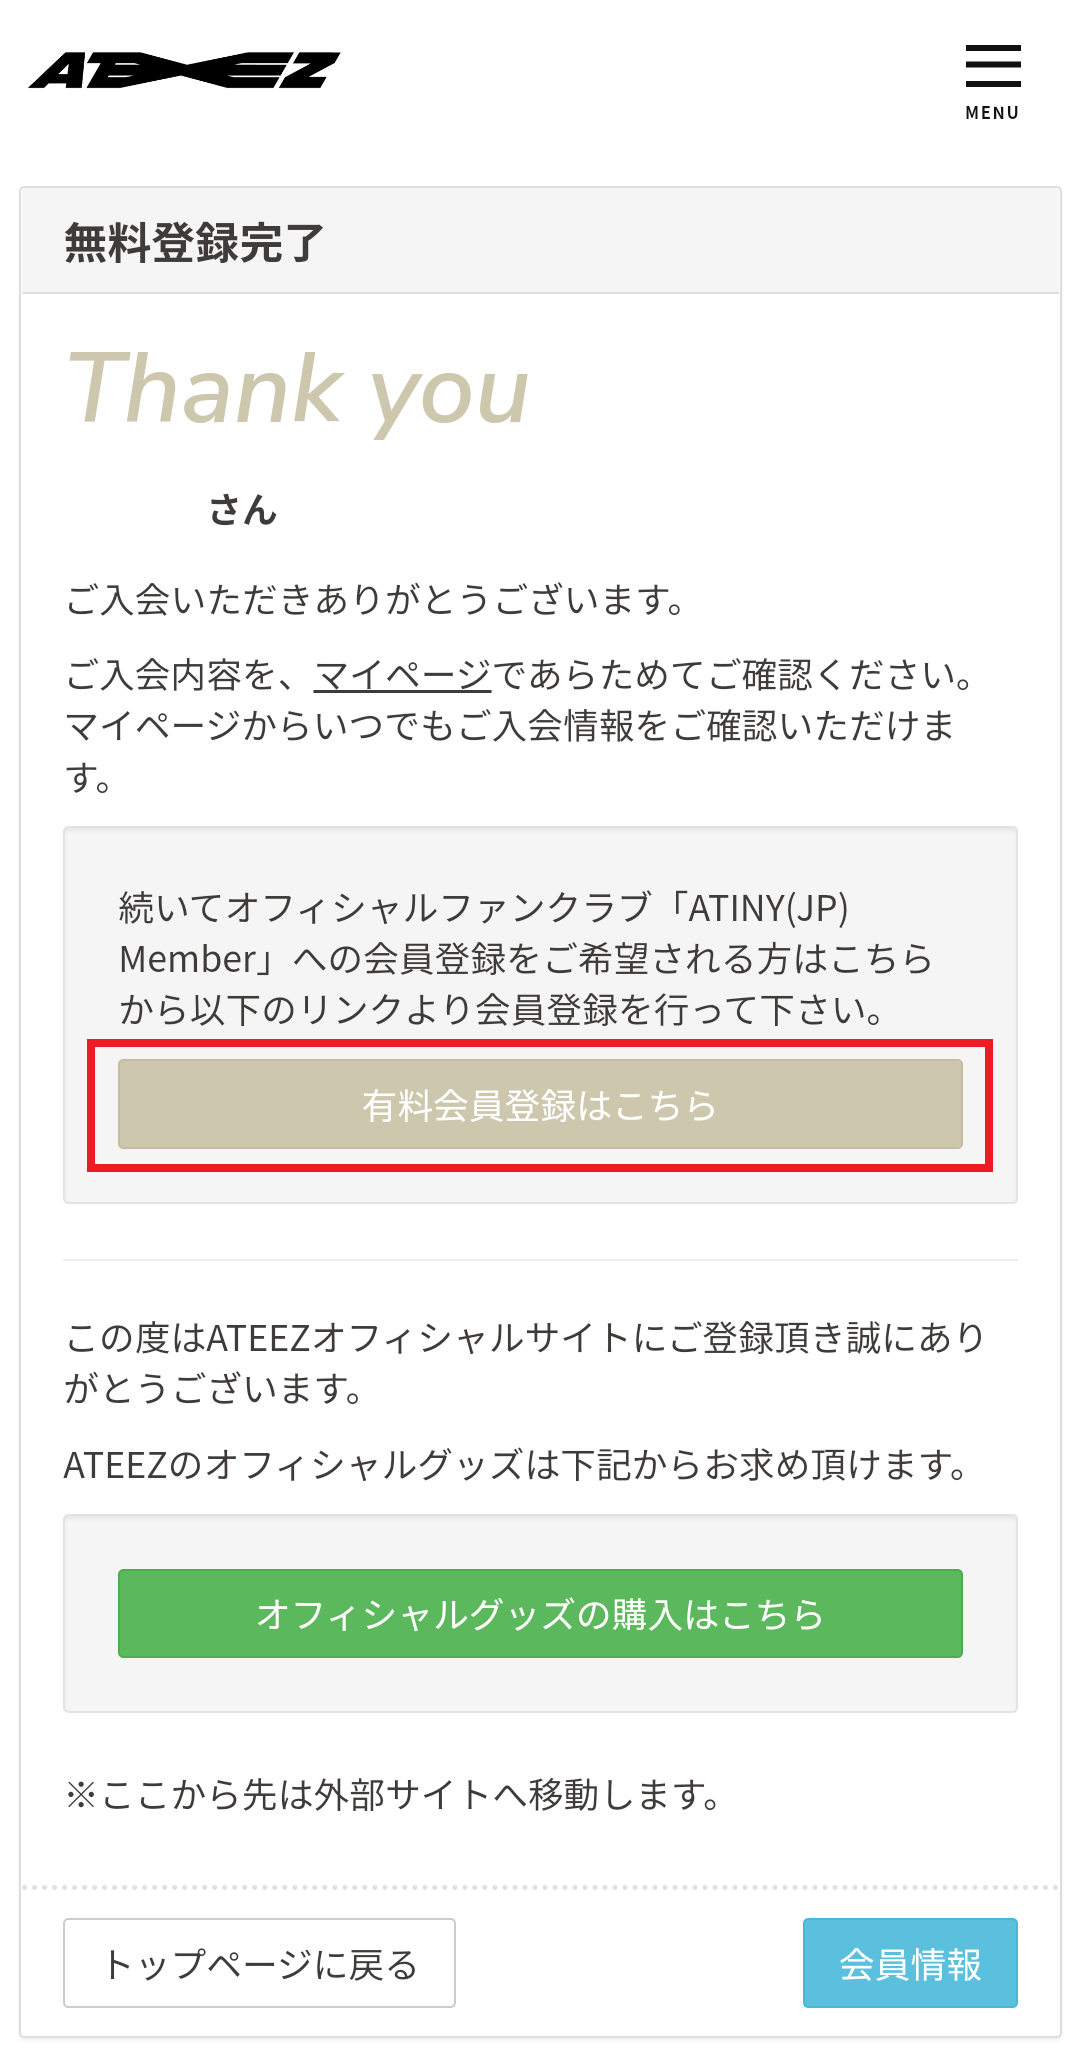 ATEEZ LIMITLESS シリアル 応募券 30枚 - CD